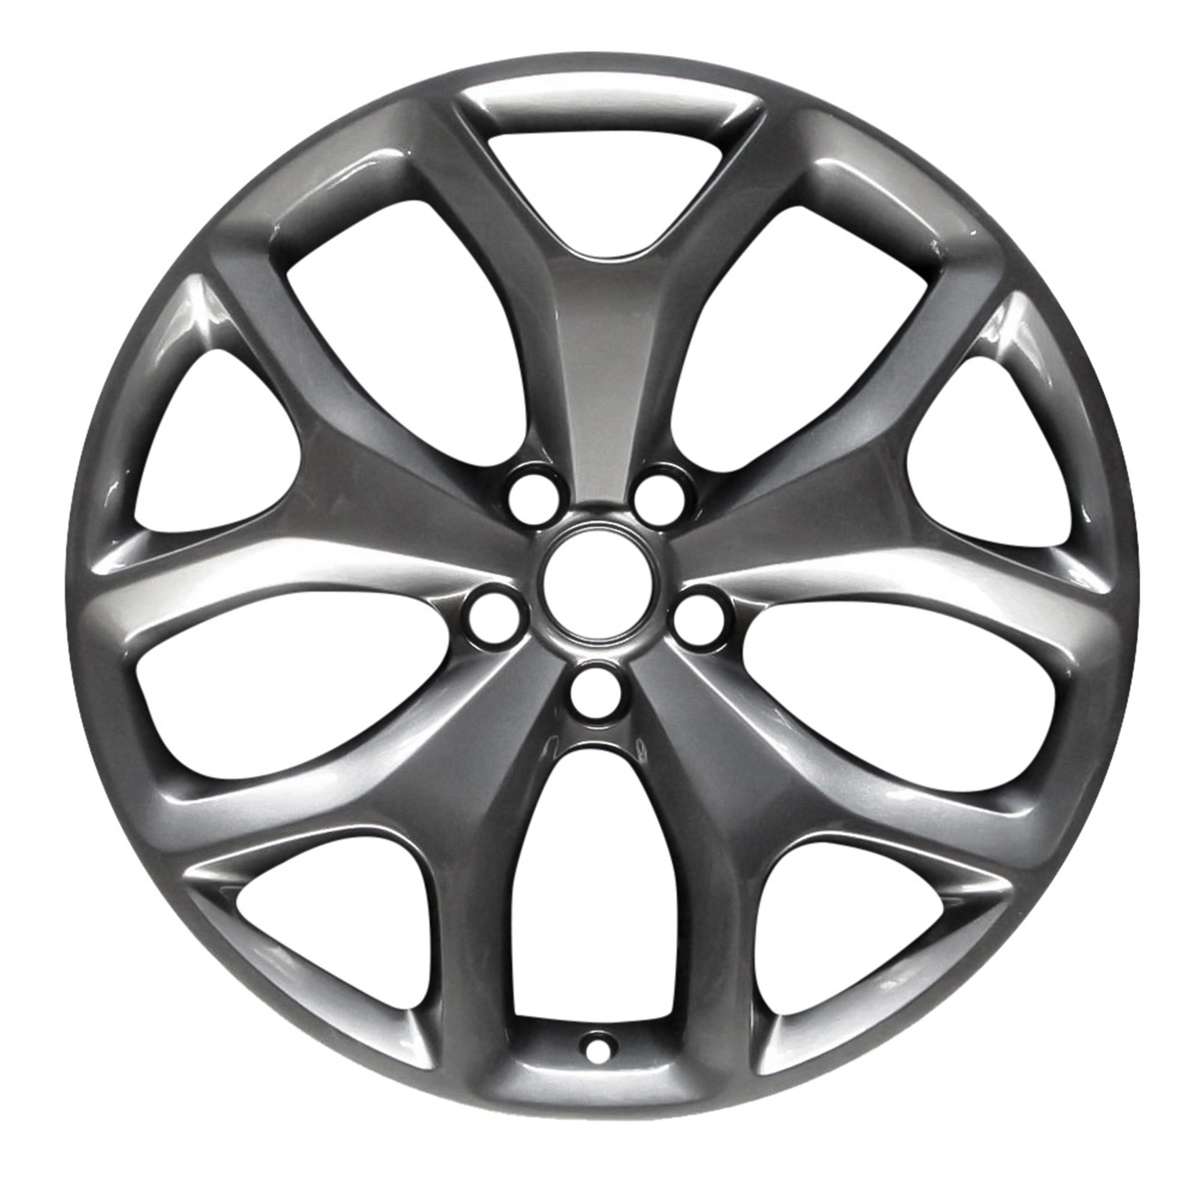 2017 Dodge Charger 20" OEM Wheel Rim W2523C